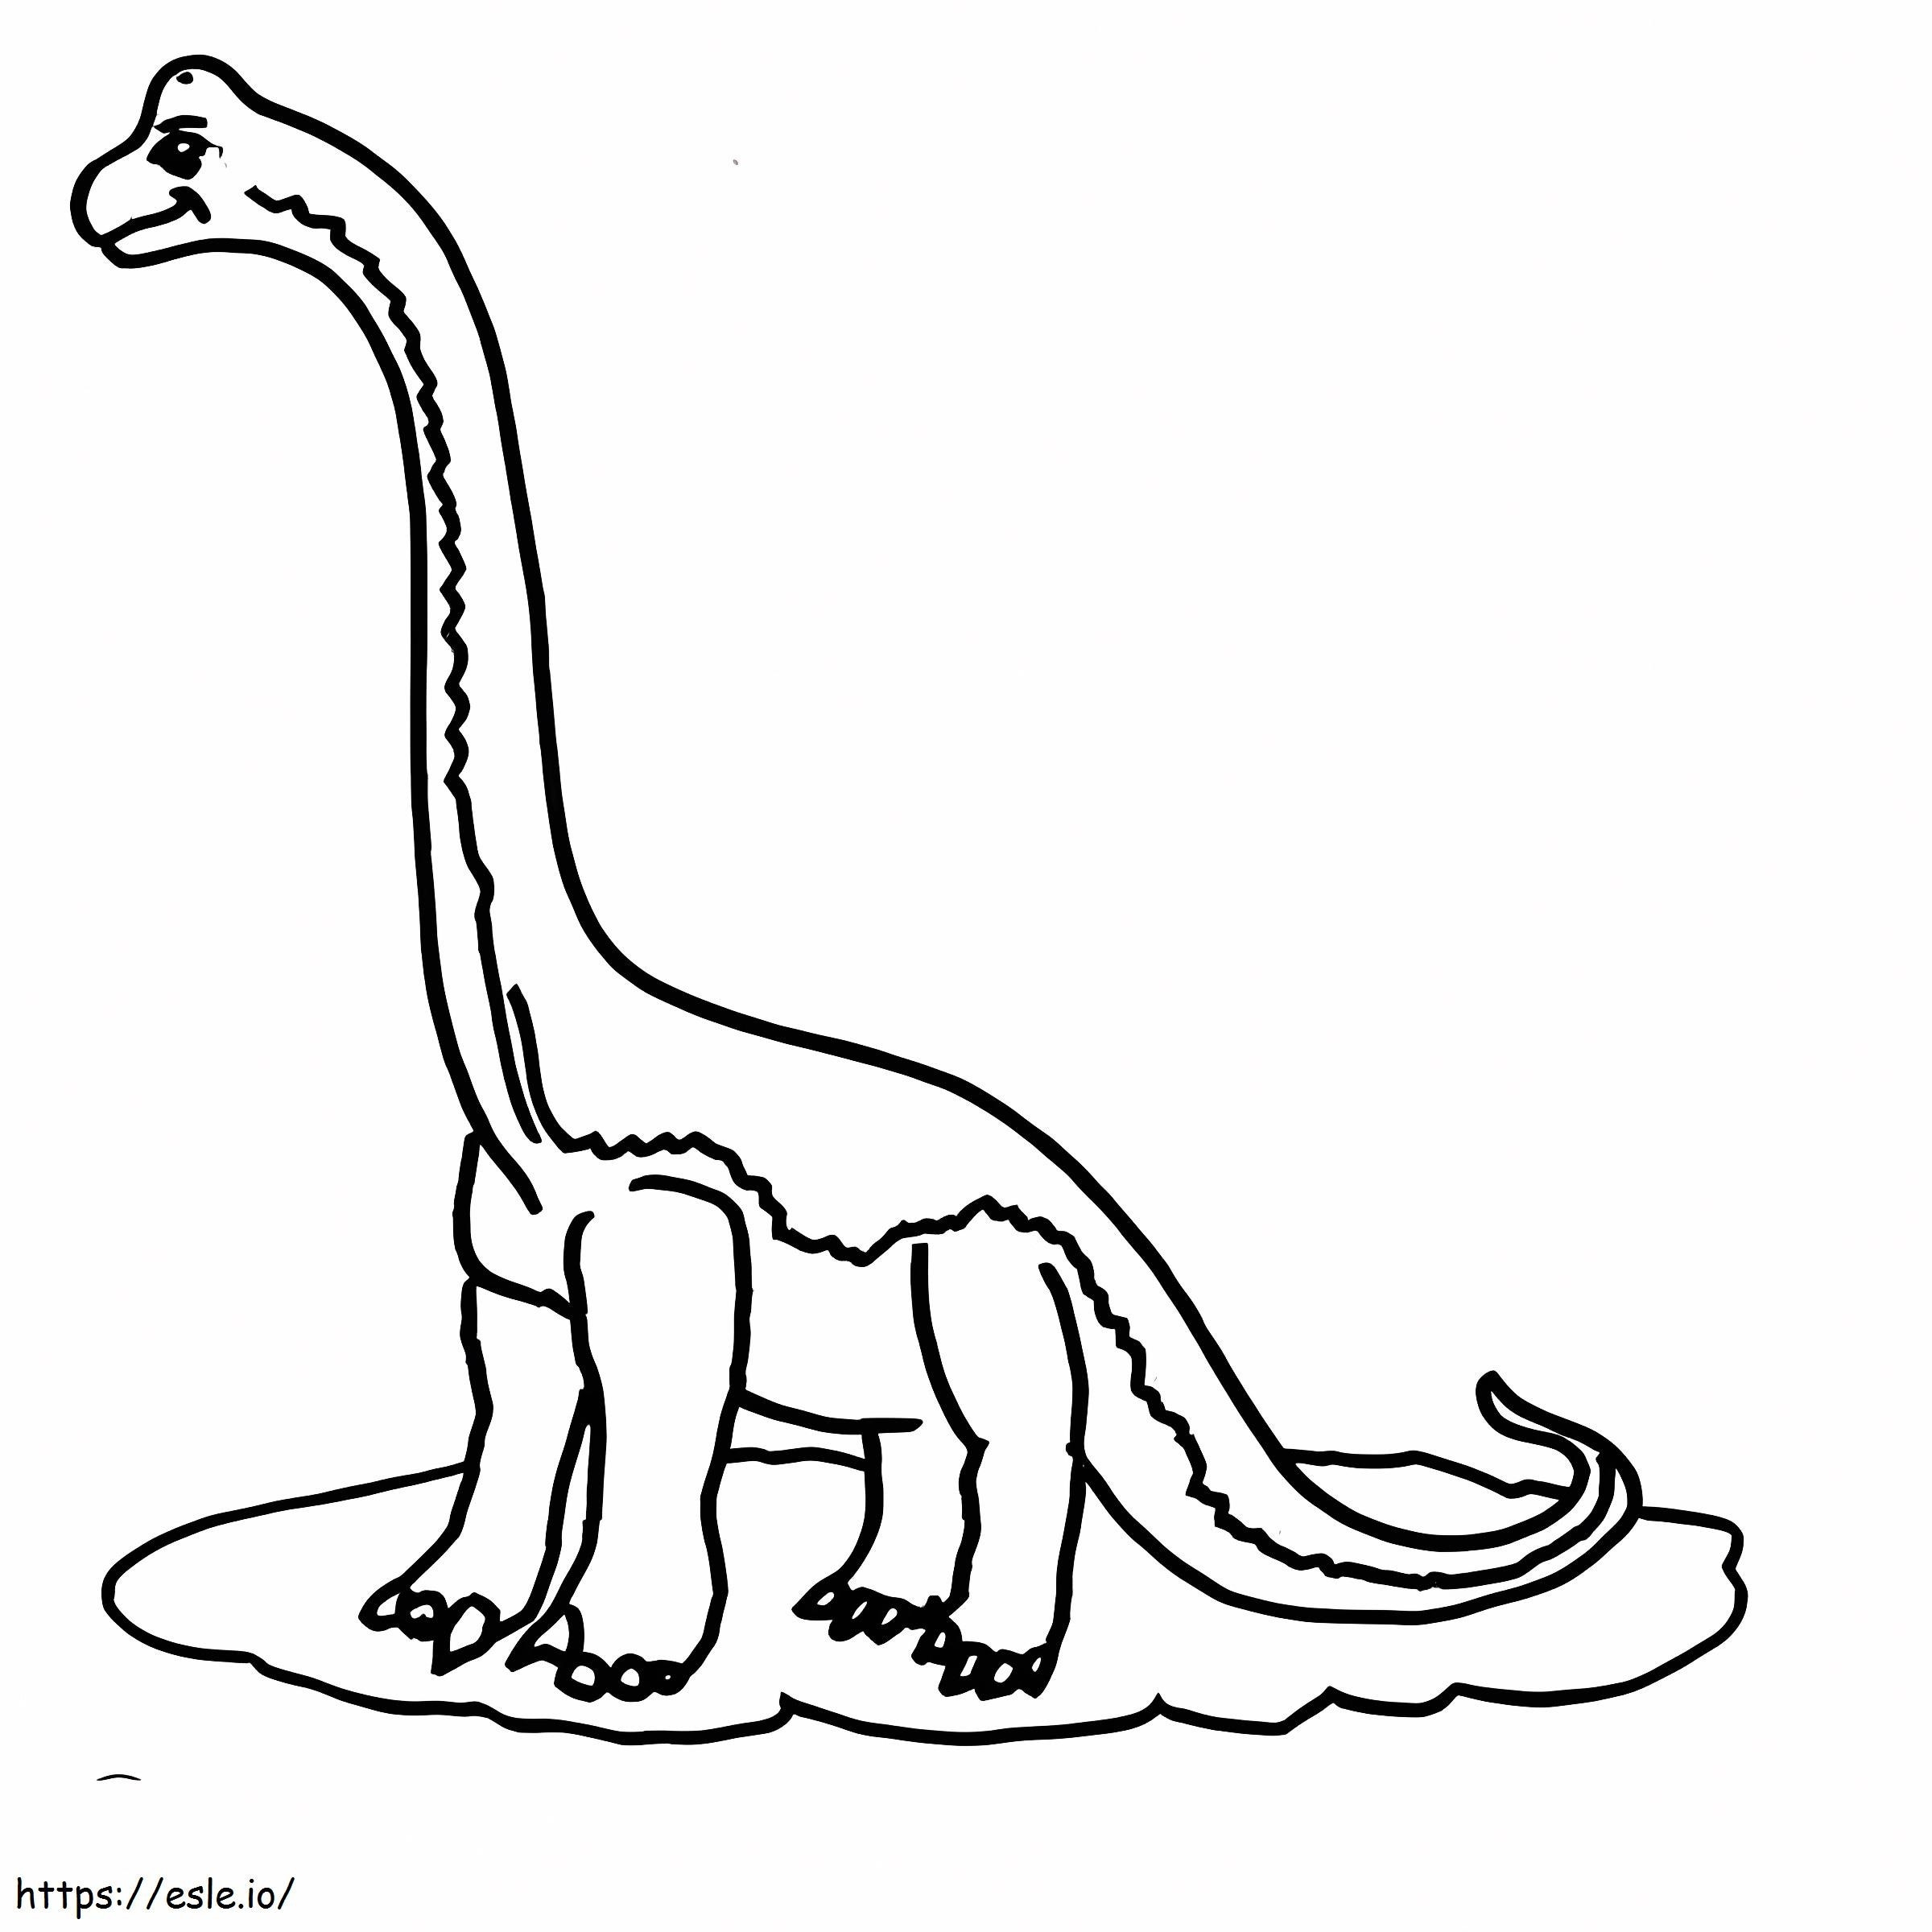 Brachiosaurus Printable coloring page